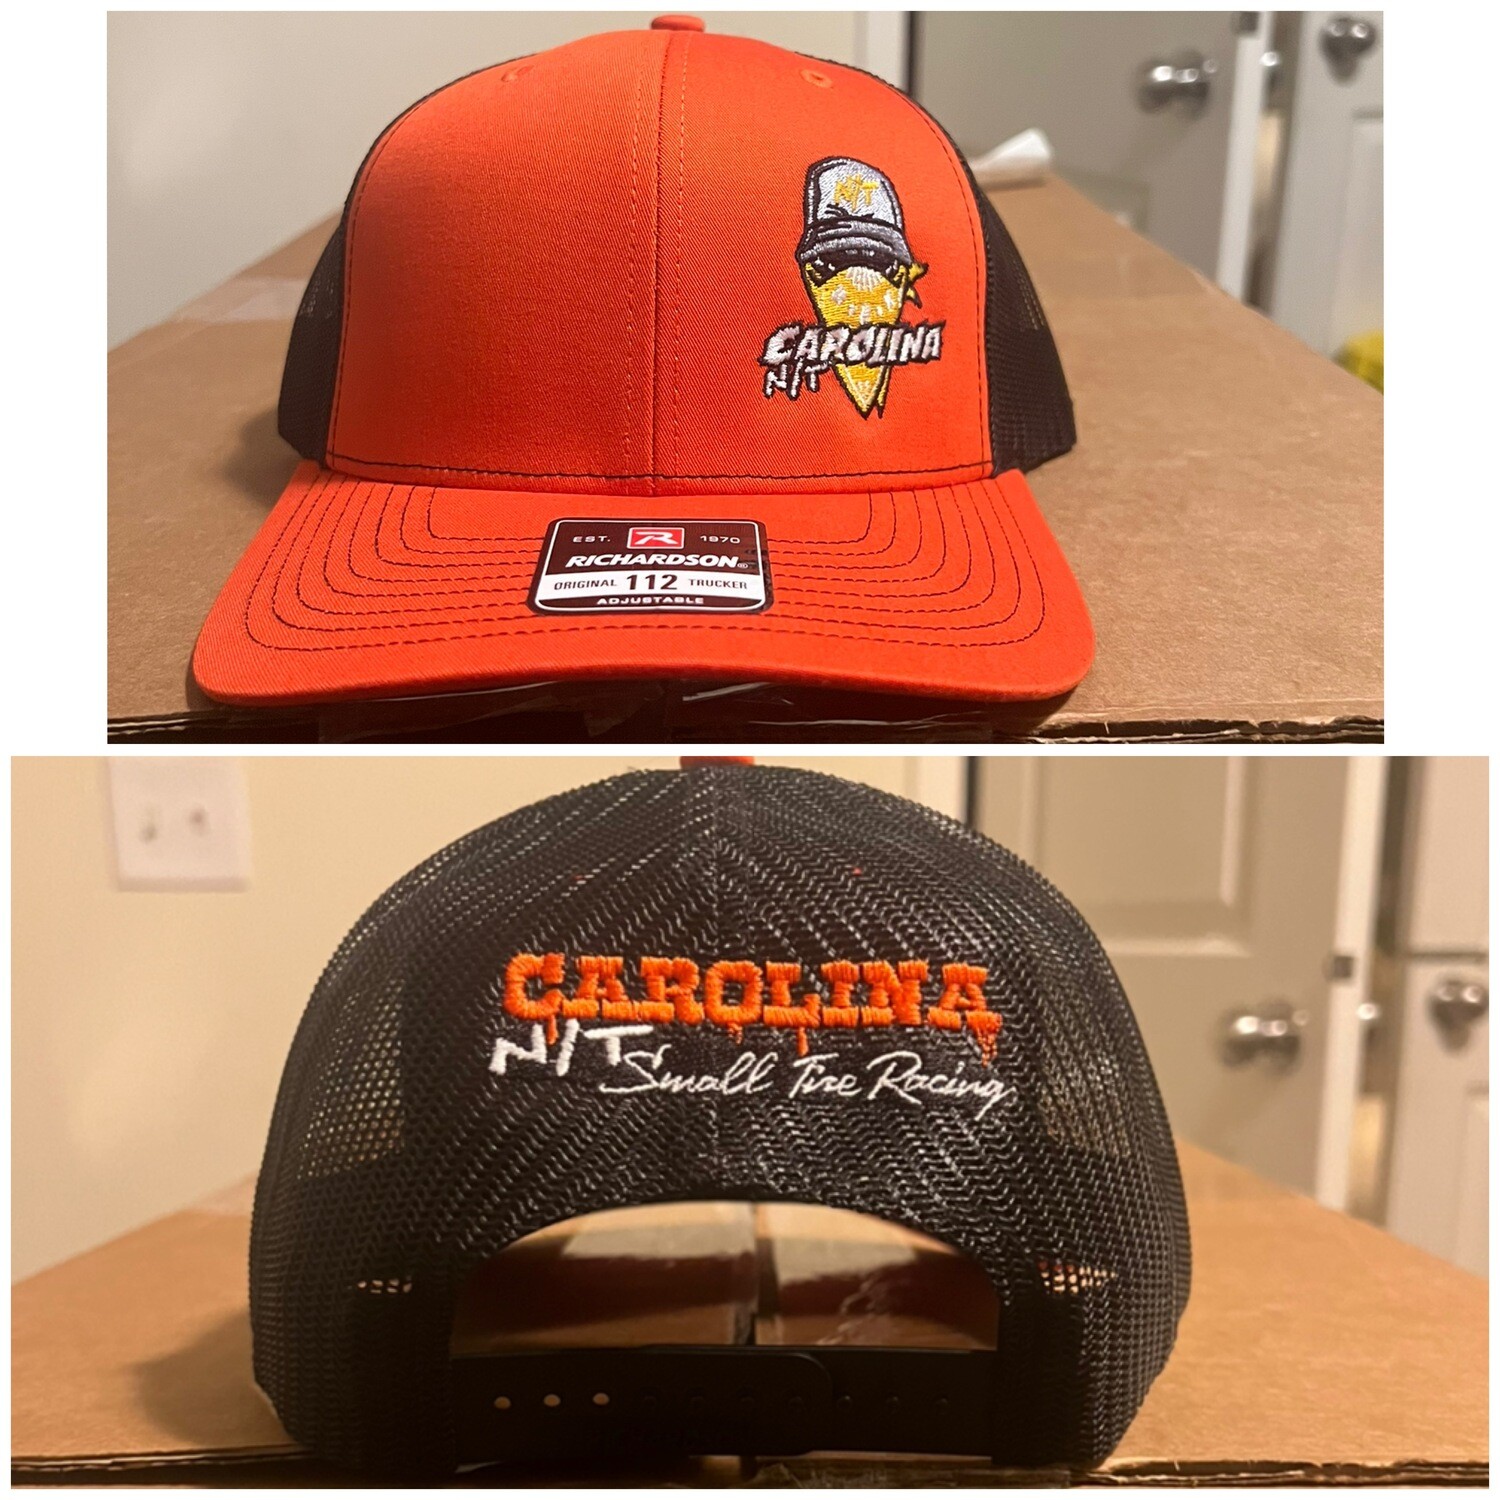 Orange/Black Ball cap bandit Trucker hat